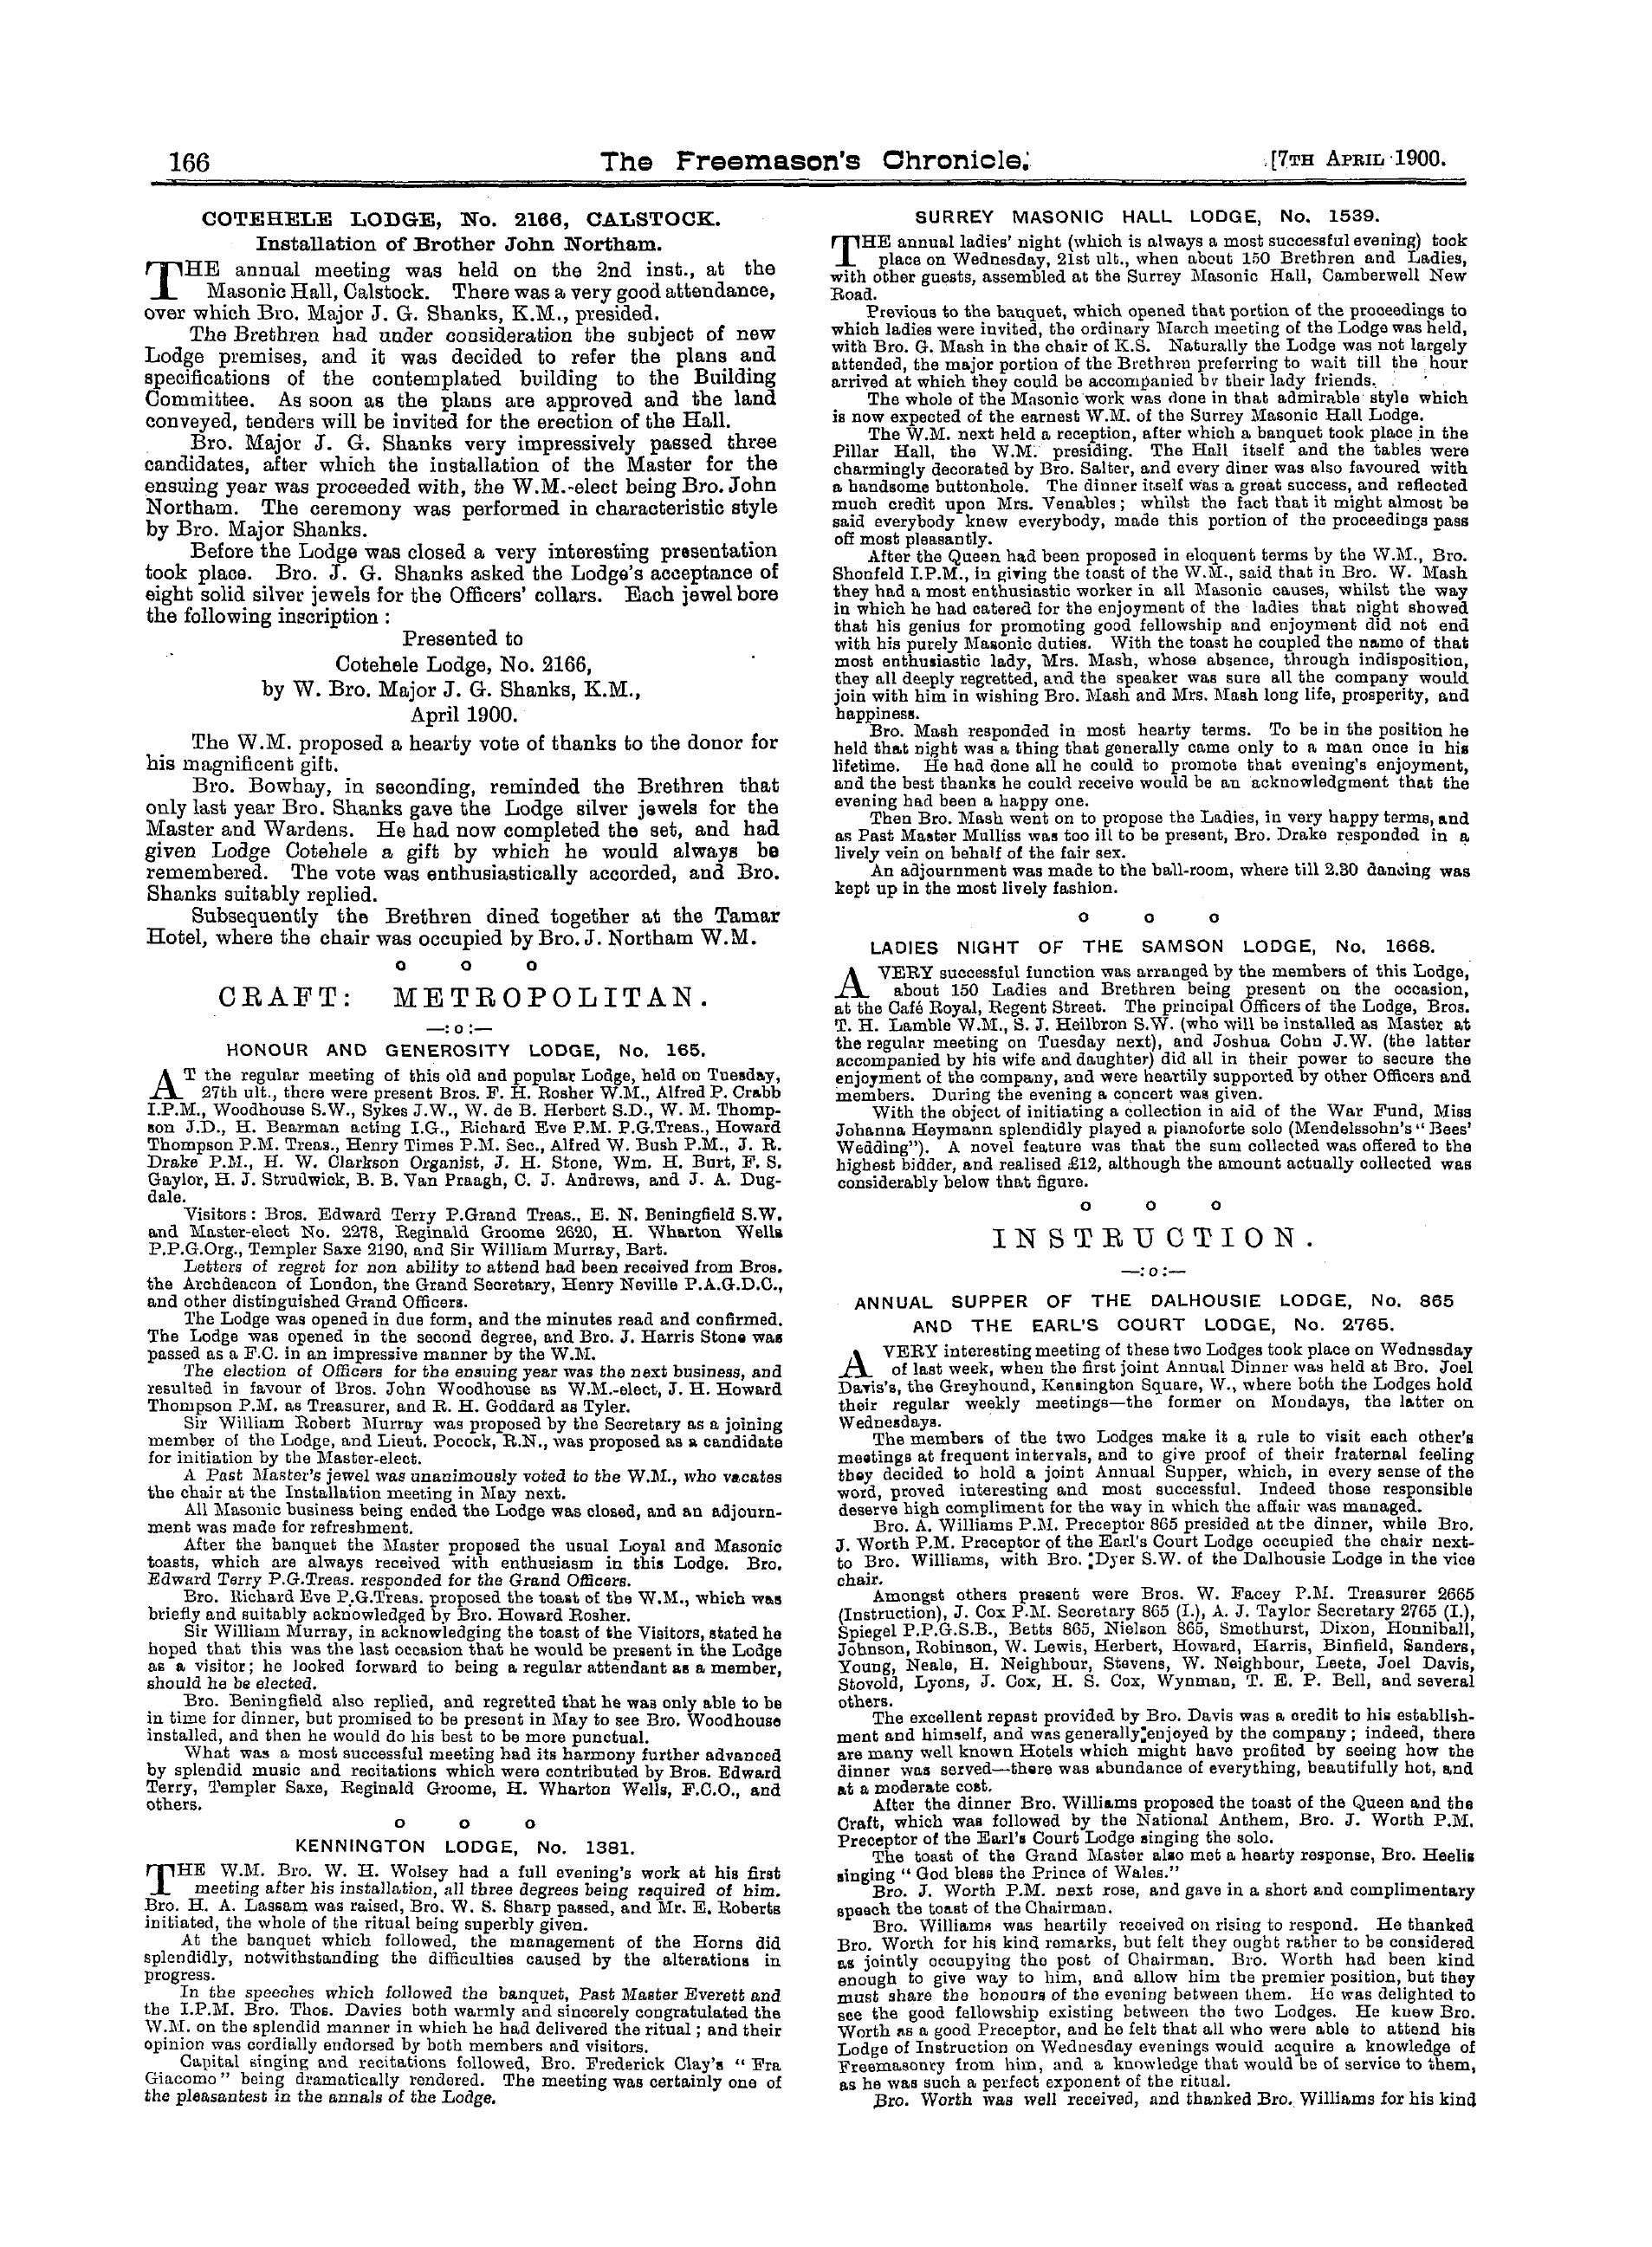 The Freemason's Chronicle: 1900-04-07: 10